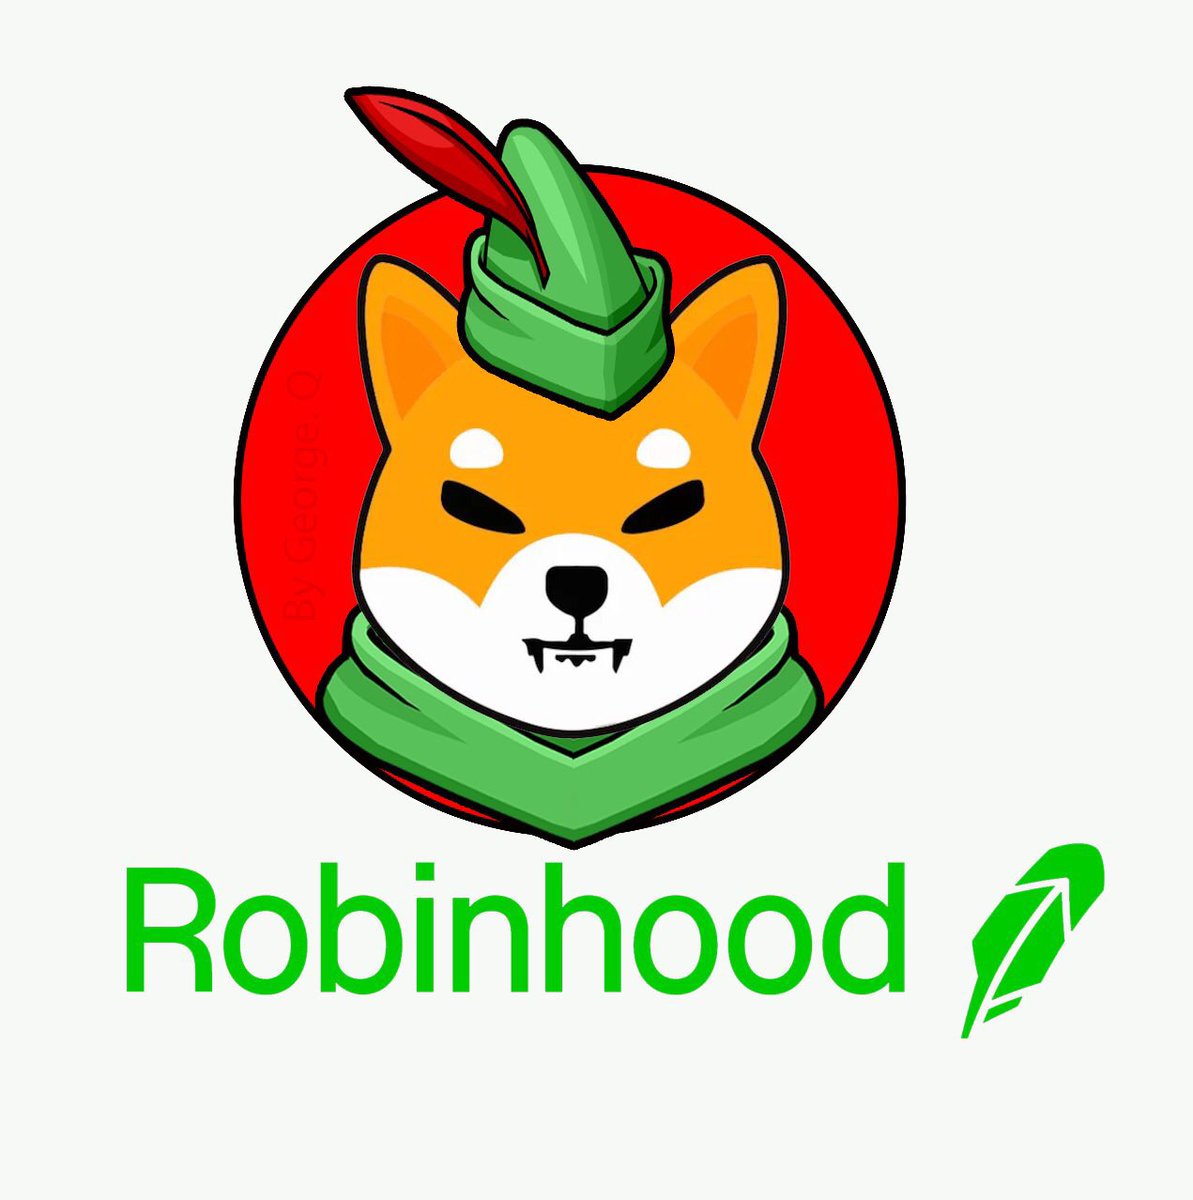 Shiba Inu Robinhood Twitter - IkaSallini